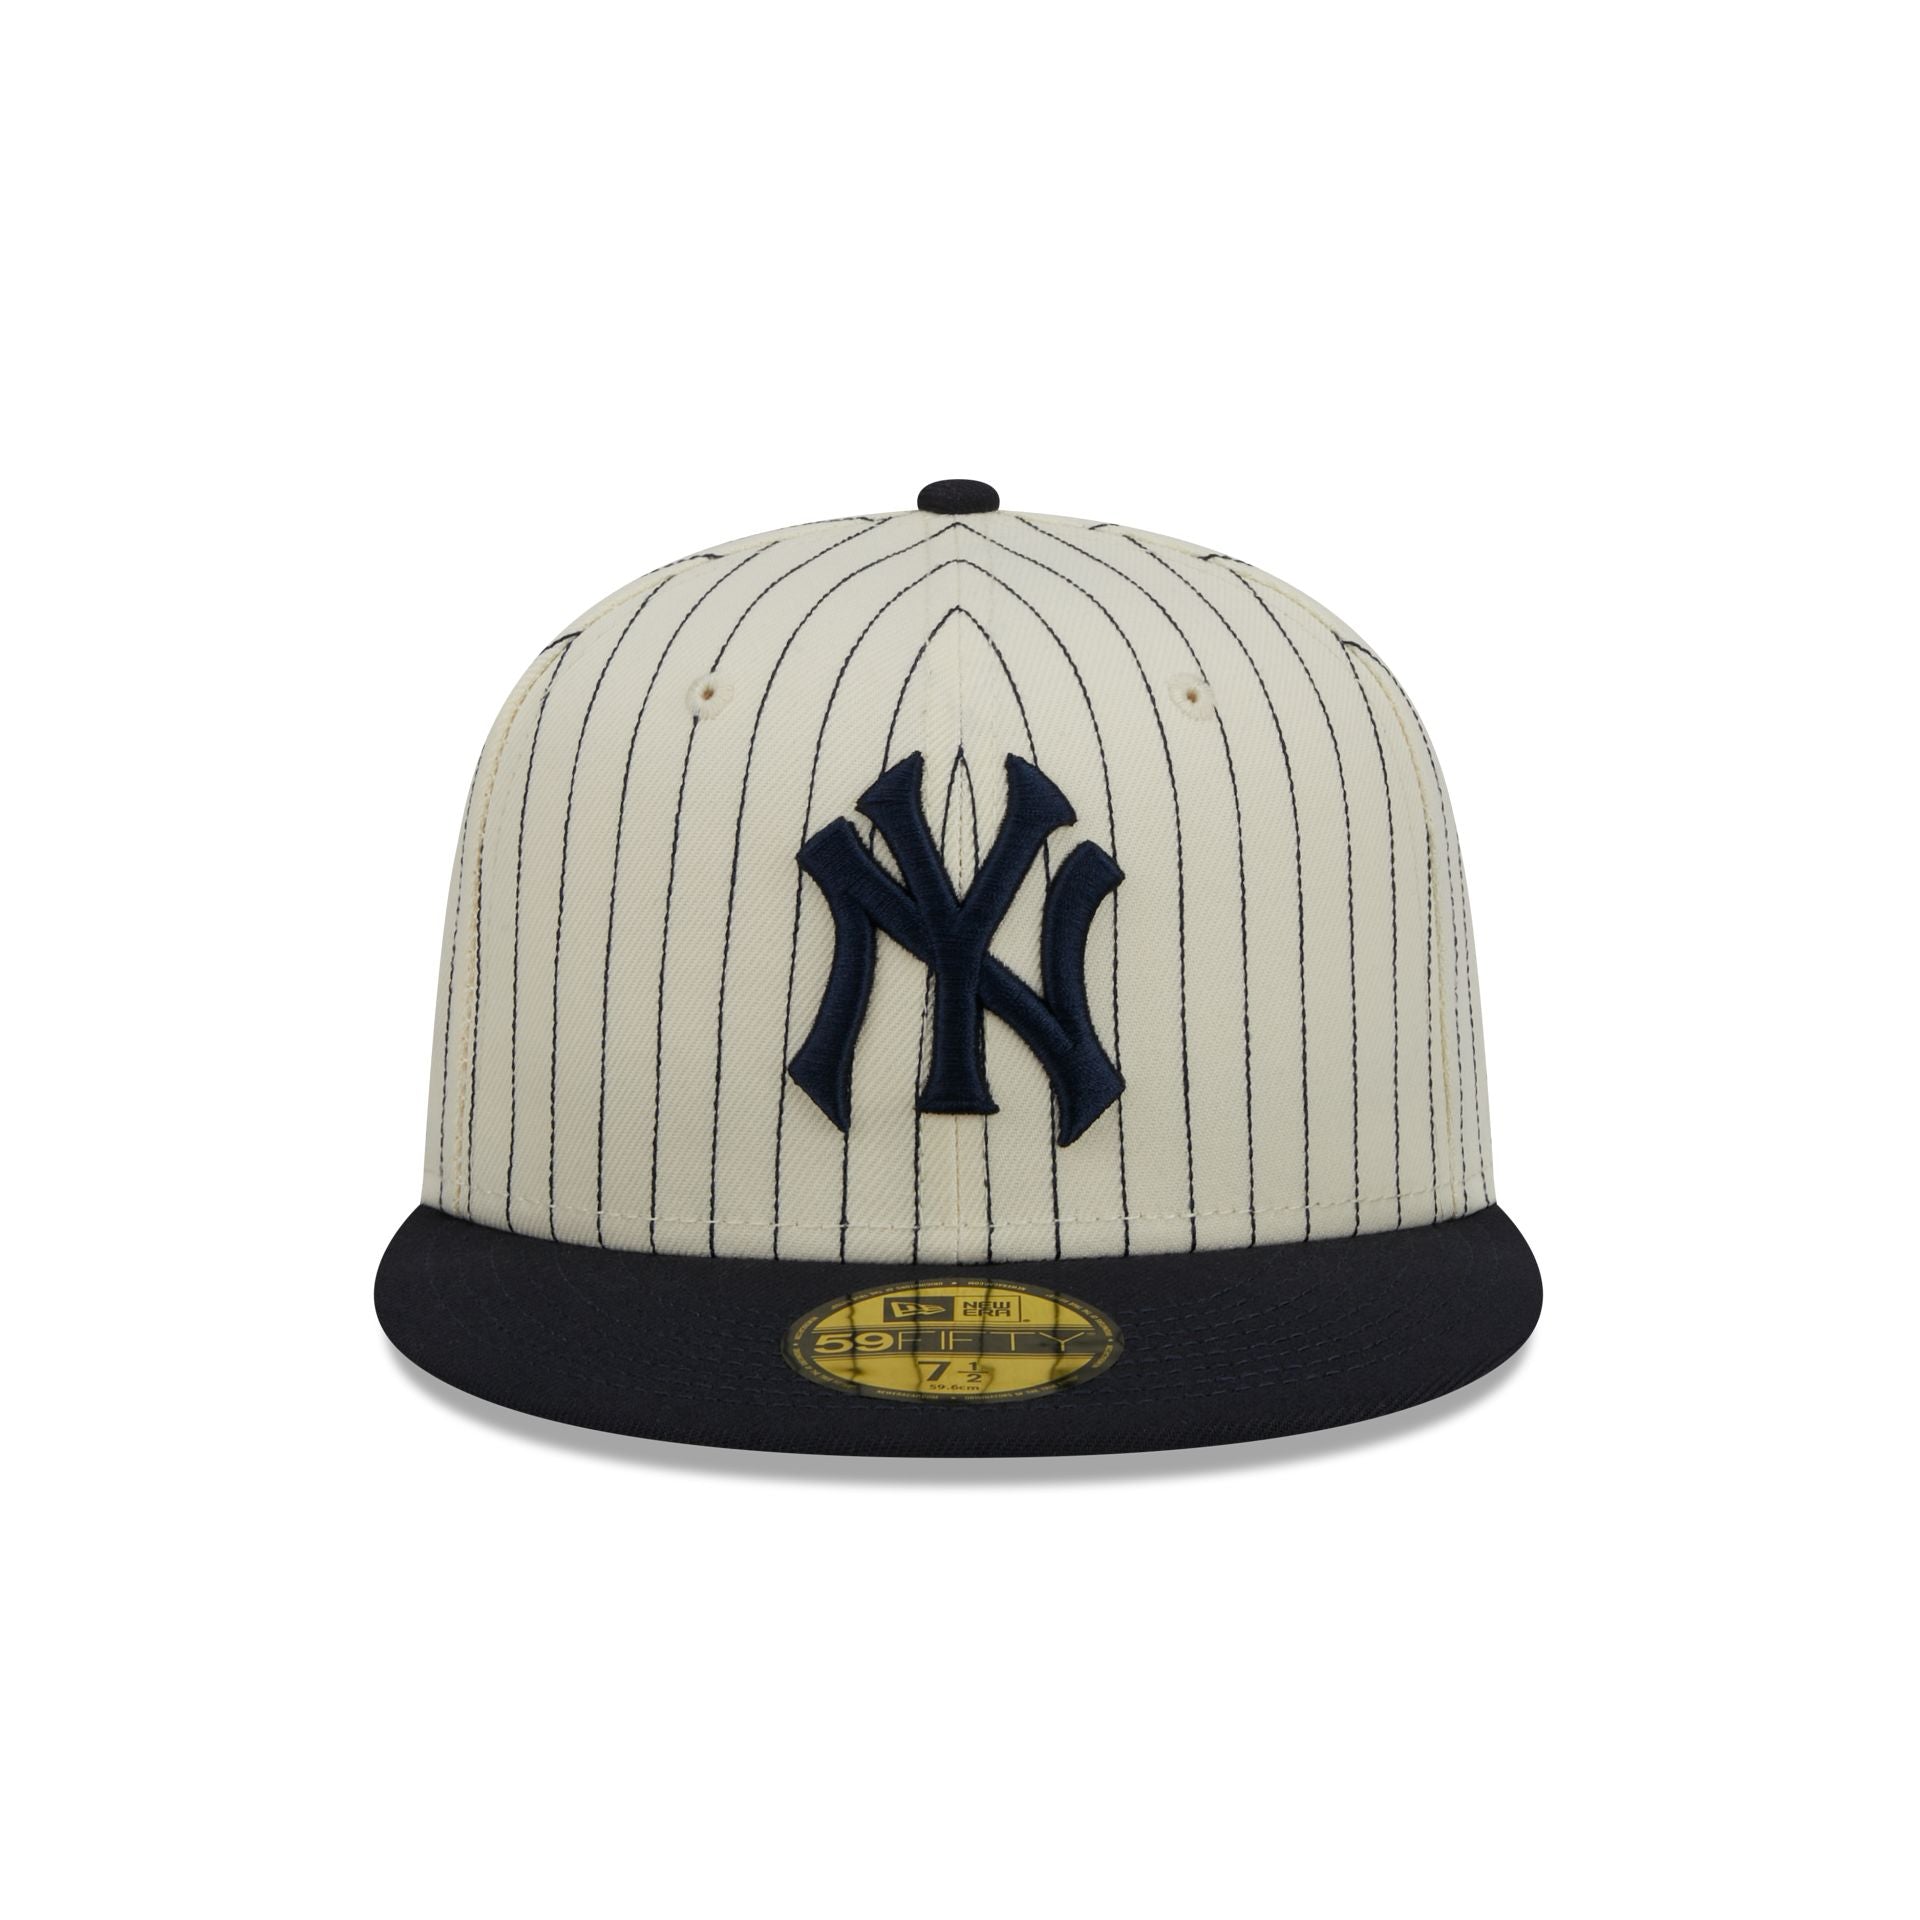 & Cap Era Yankees Caps New – Hats New York